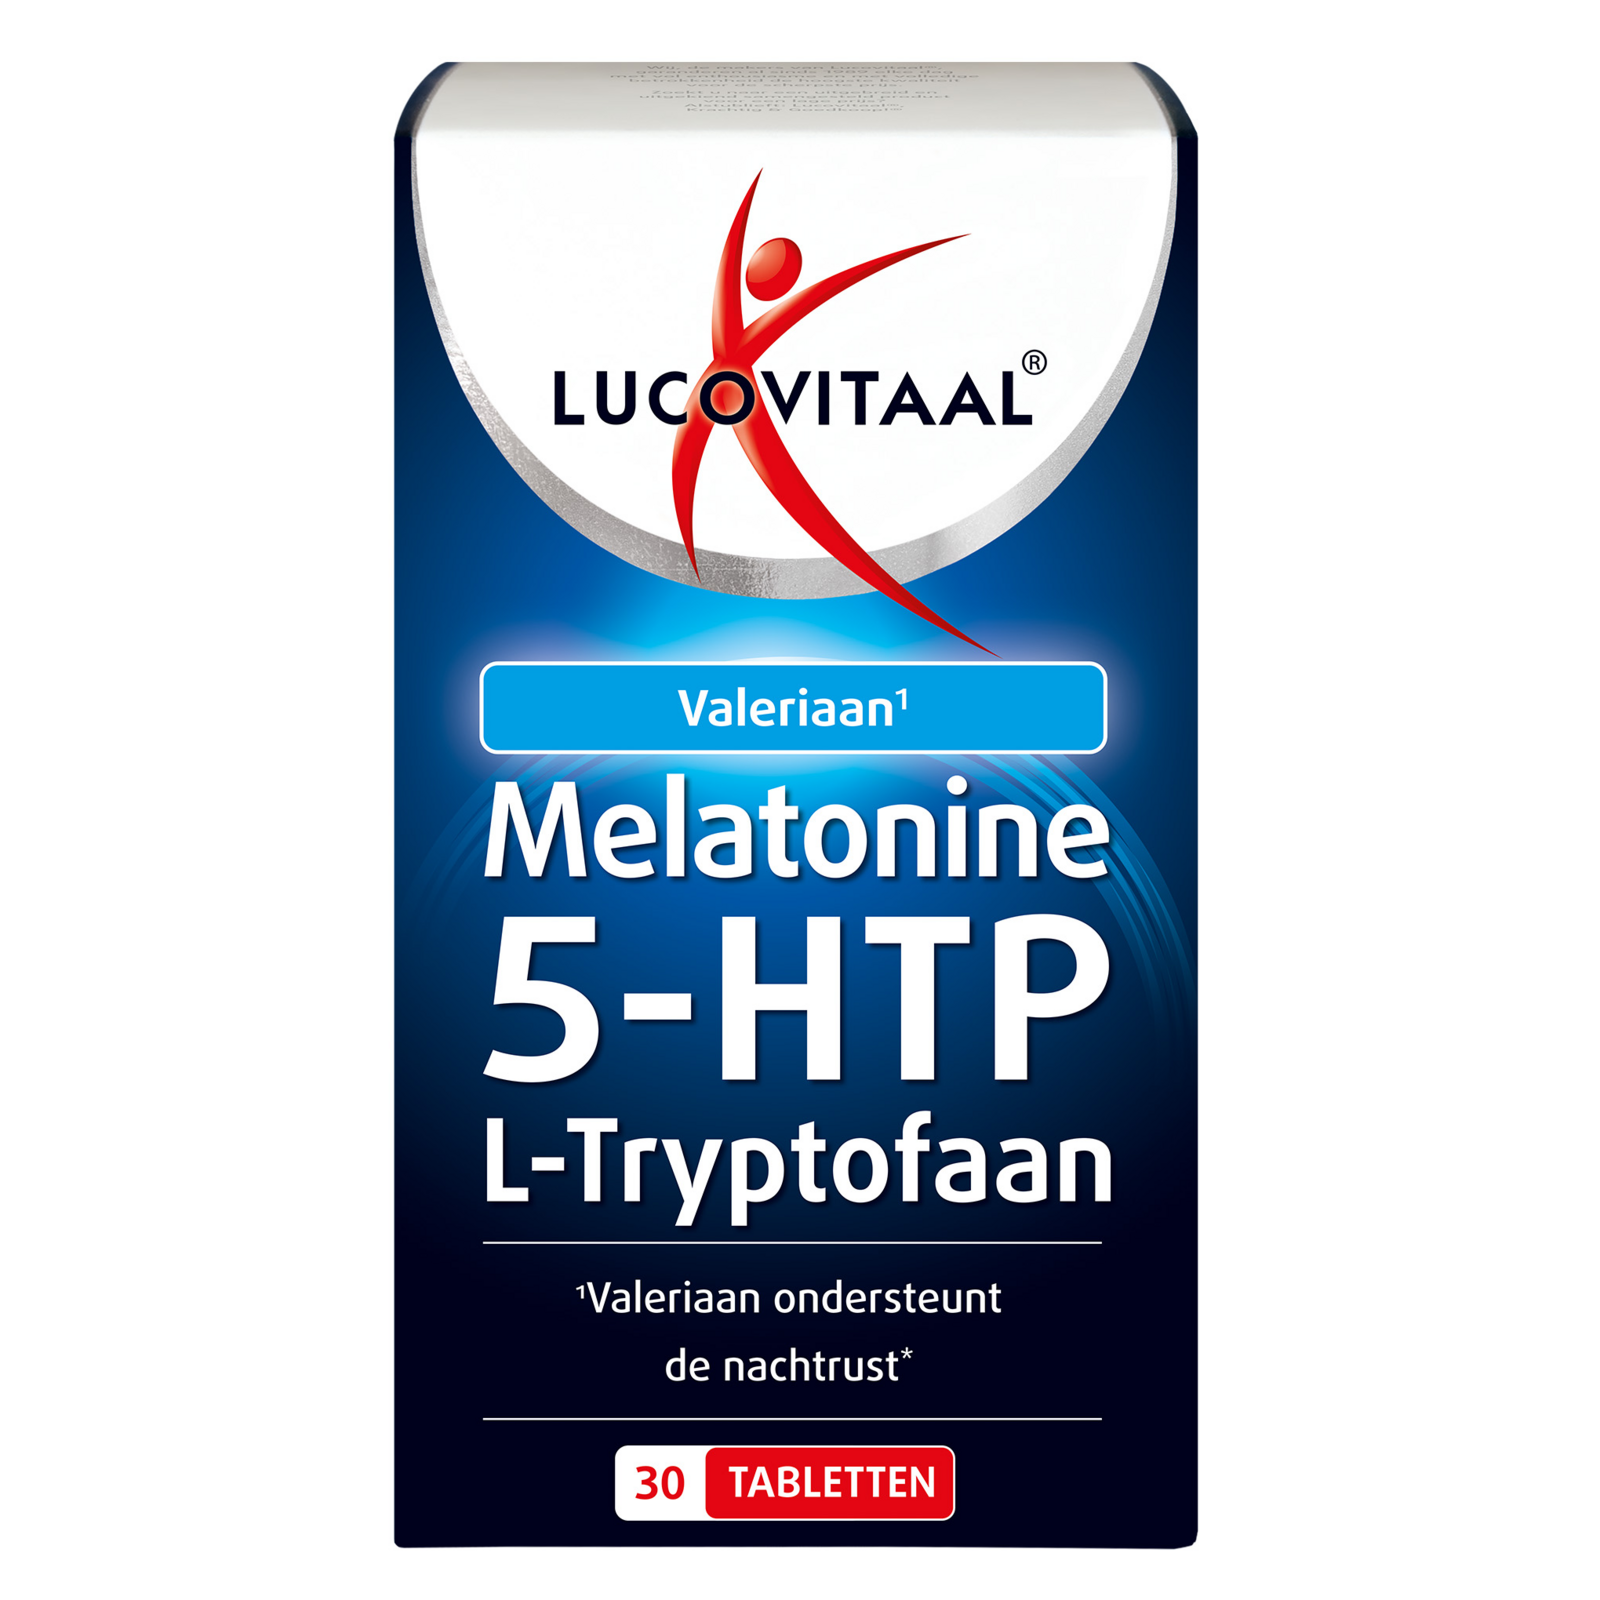 Lucovitaal Melatonine 5-HTP L-Tryptofaan Tabletten